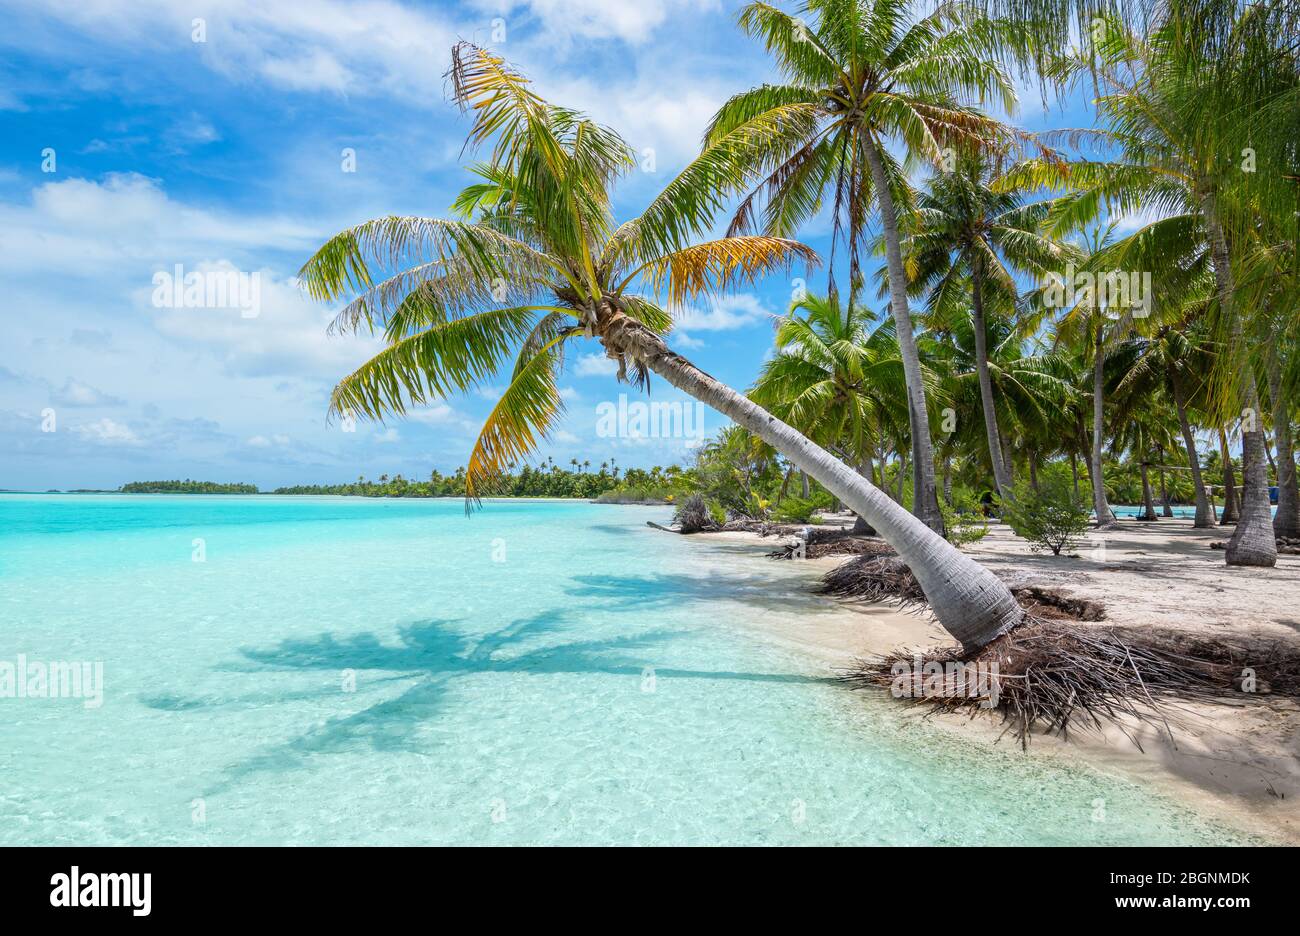 Tropical palm tree and beach paradise of Fakarava Island, French Polynesia. Stock Photo